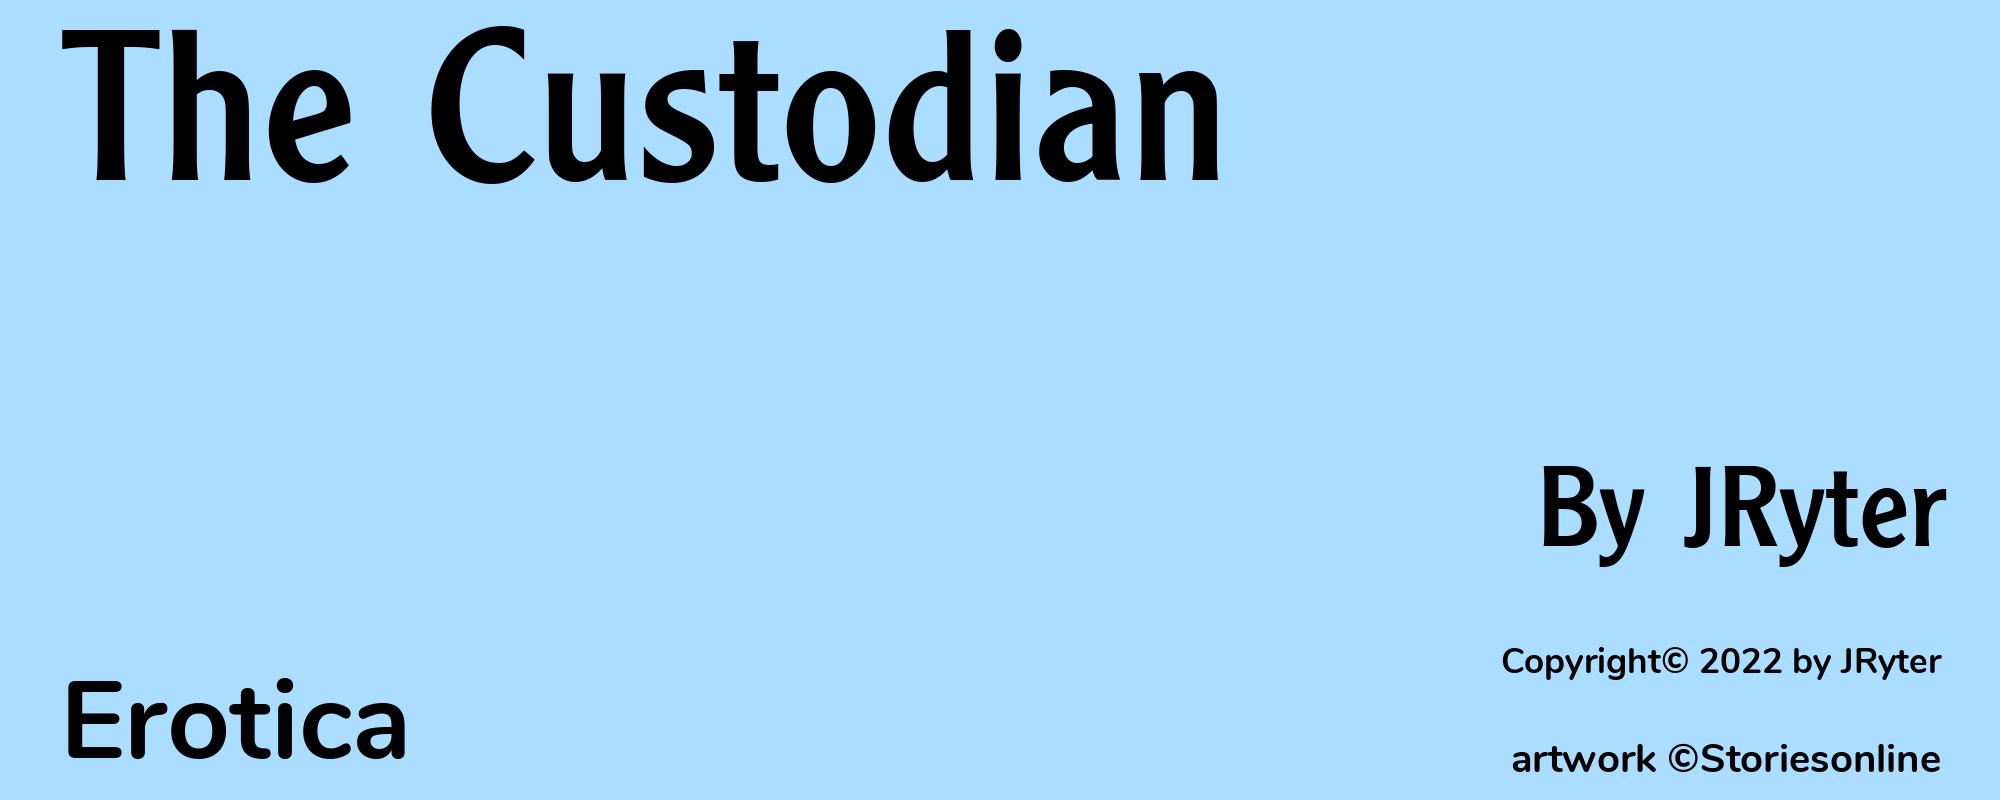 The Custodian - Cover